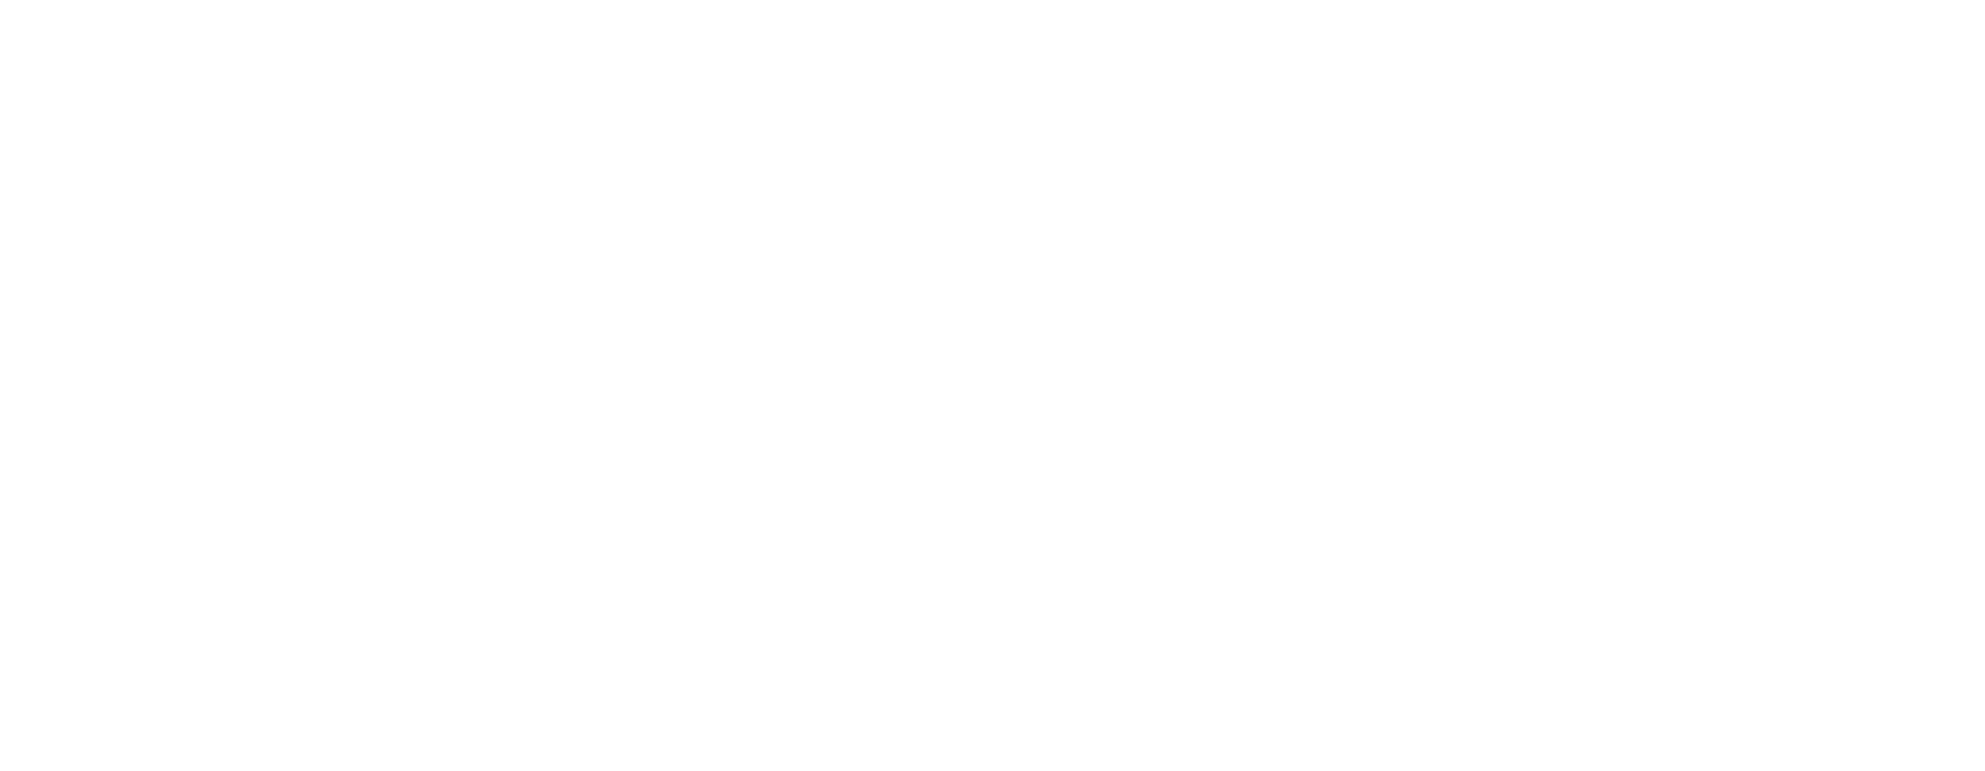 Andy Seuss